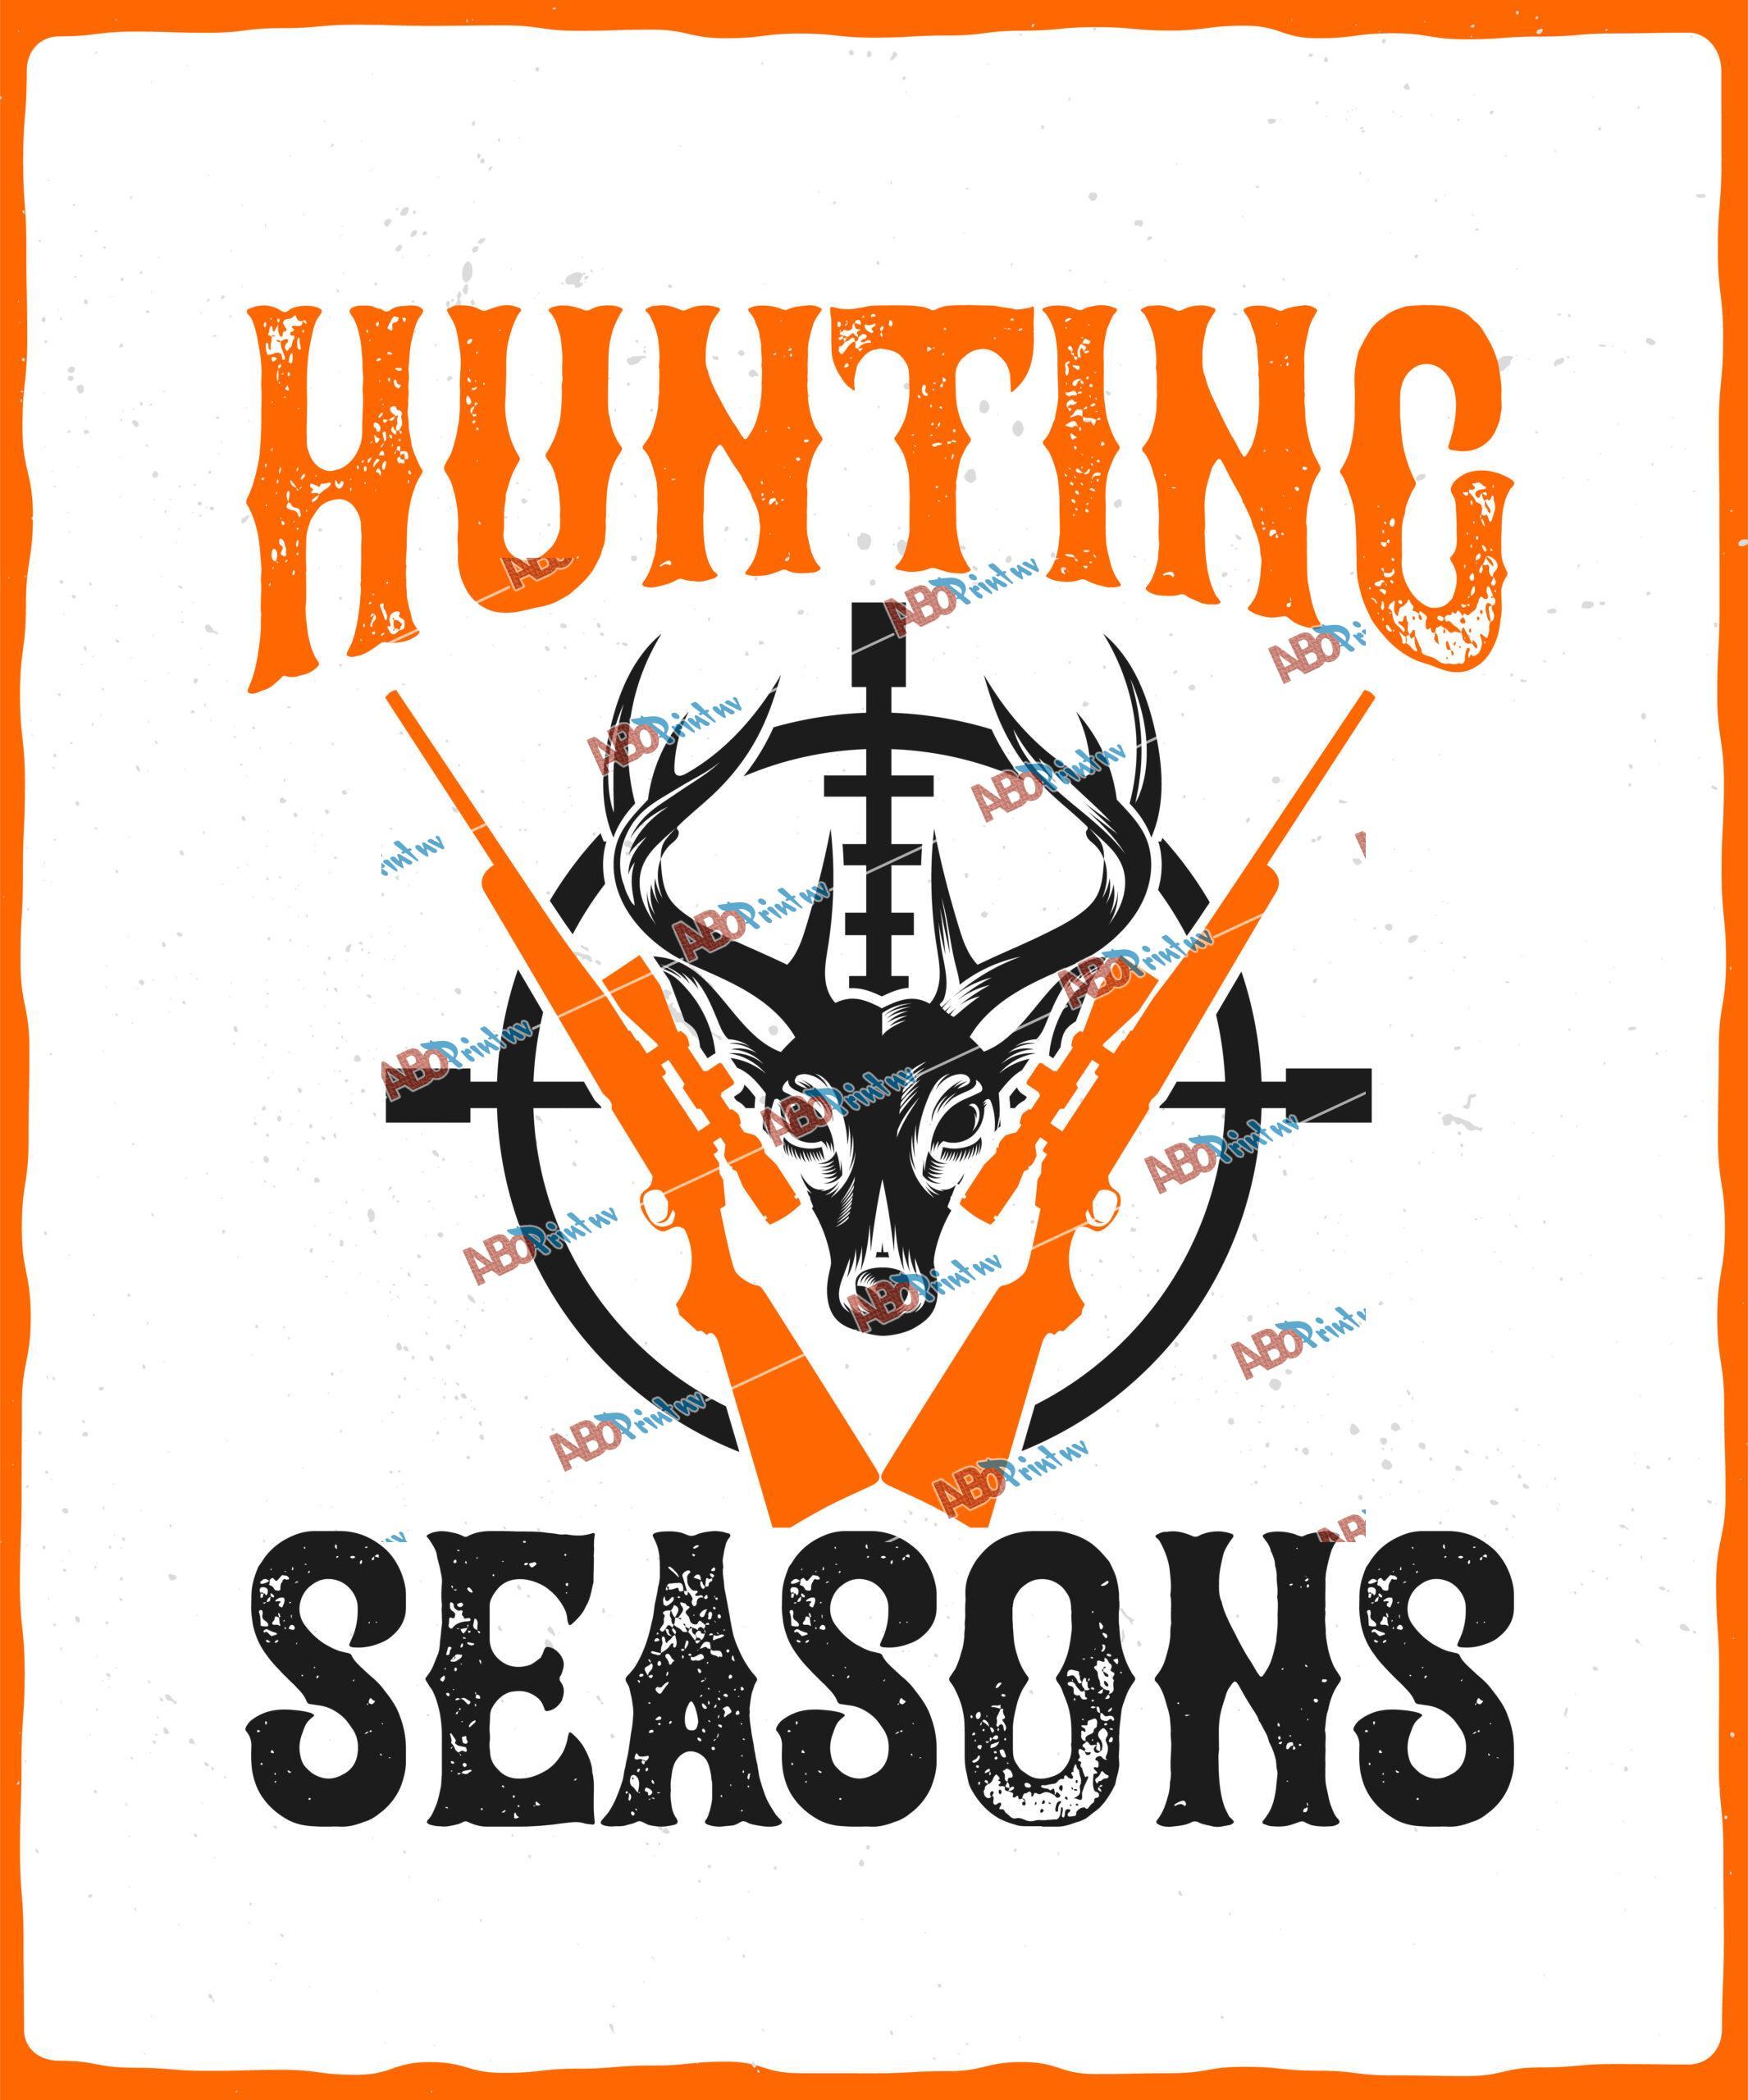 Hunting seasons